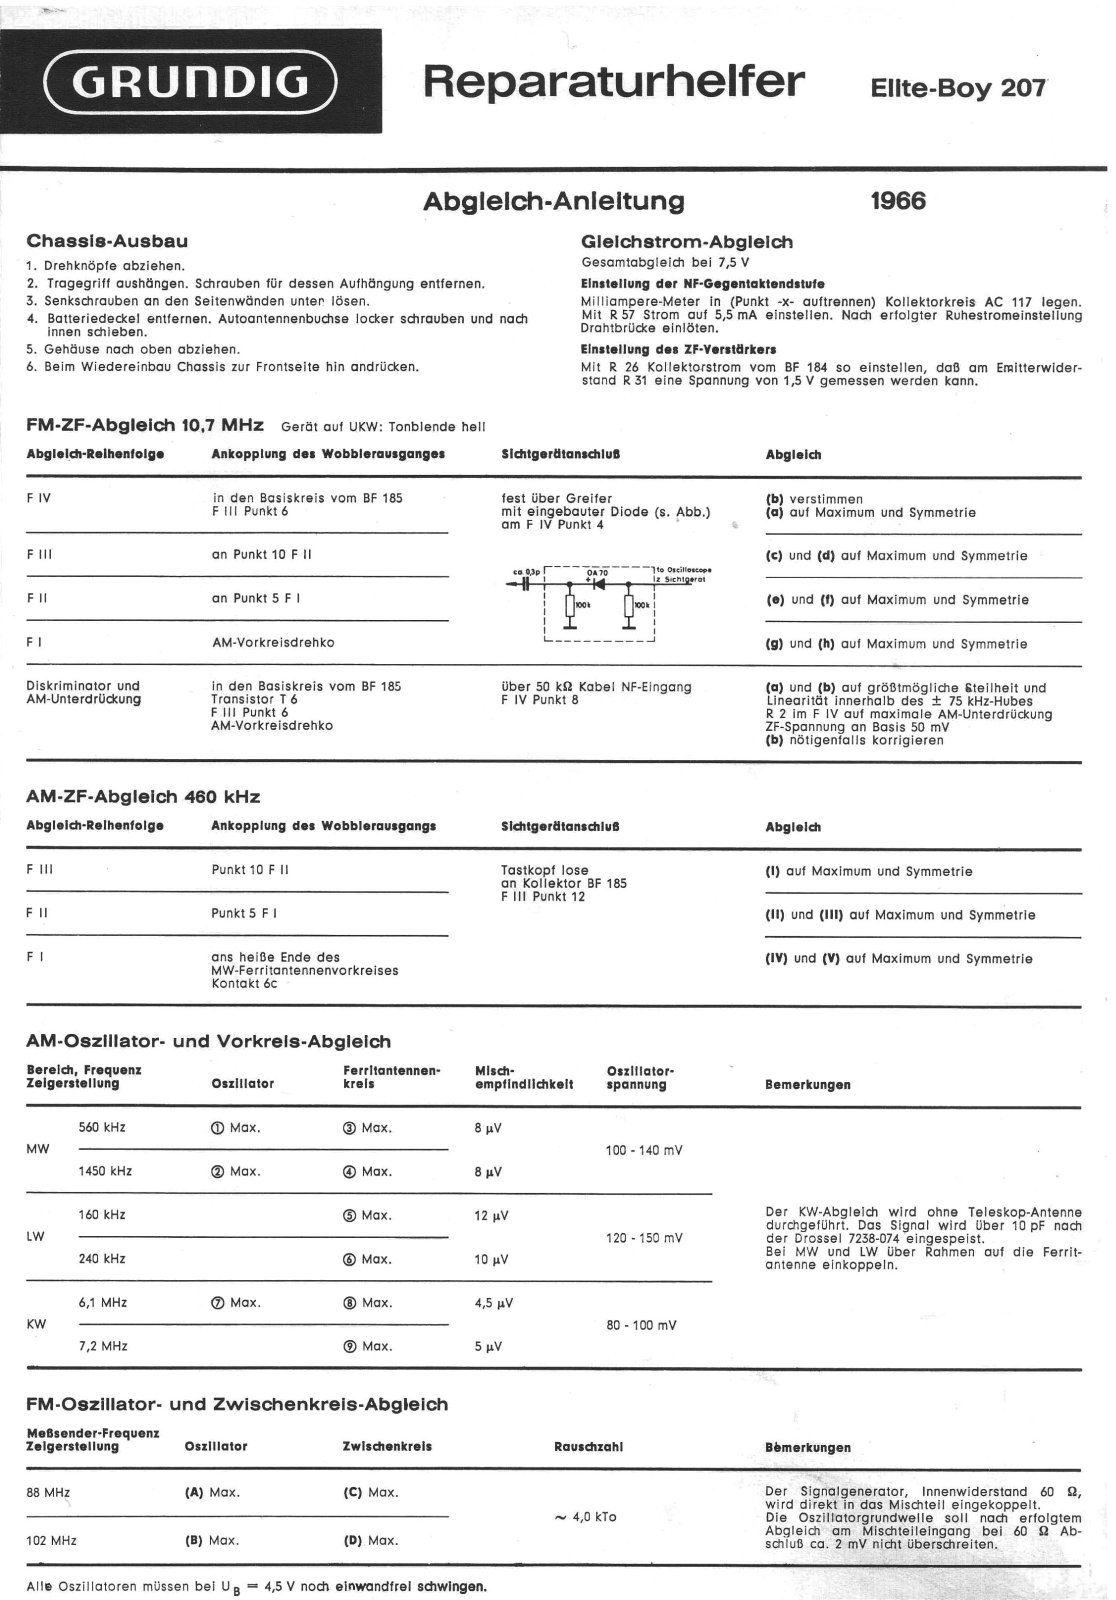 Grundig ELITE-BOY-207 Service Manual